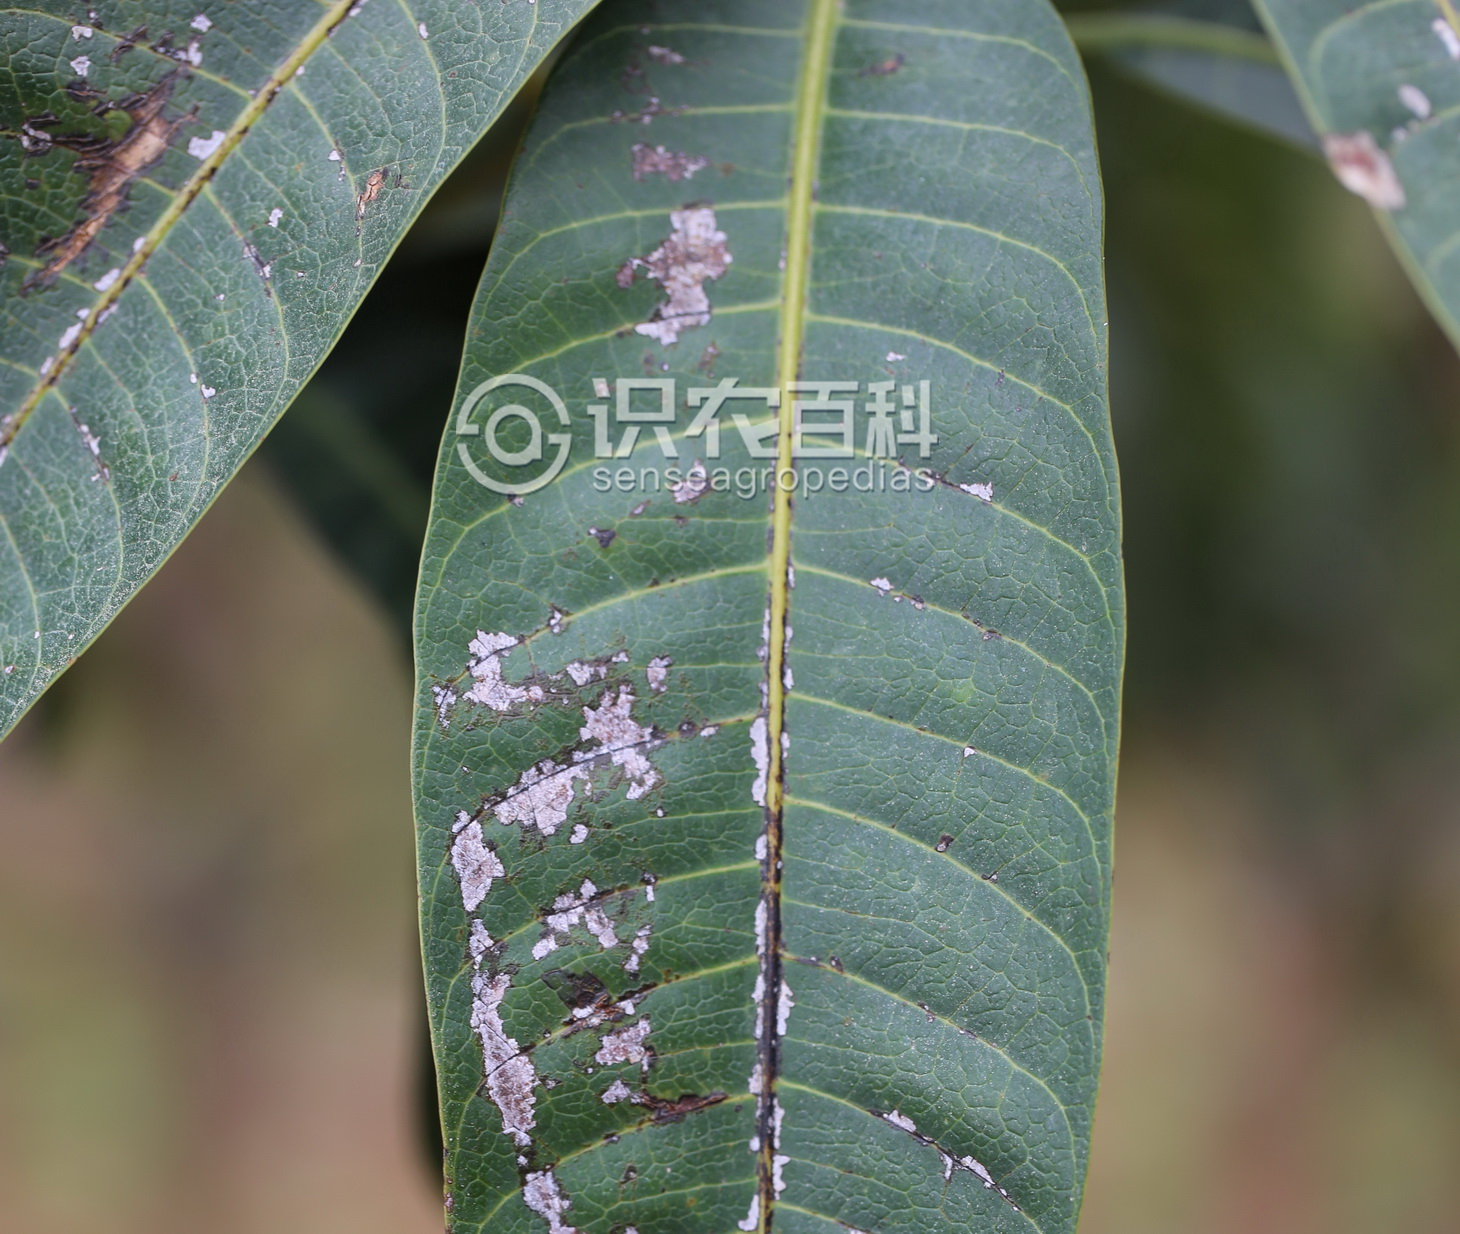 植物診所: 芒果畸形病 (mango malformation disease)